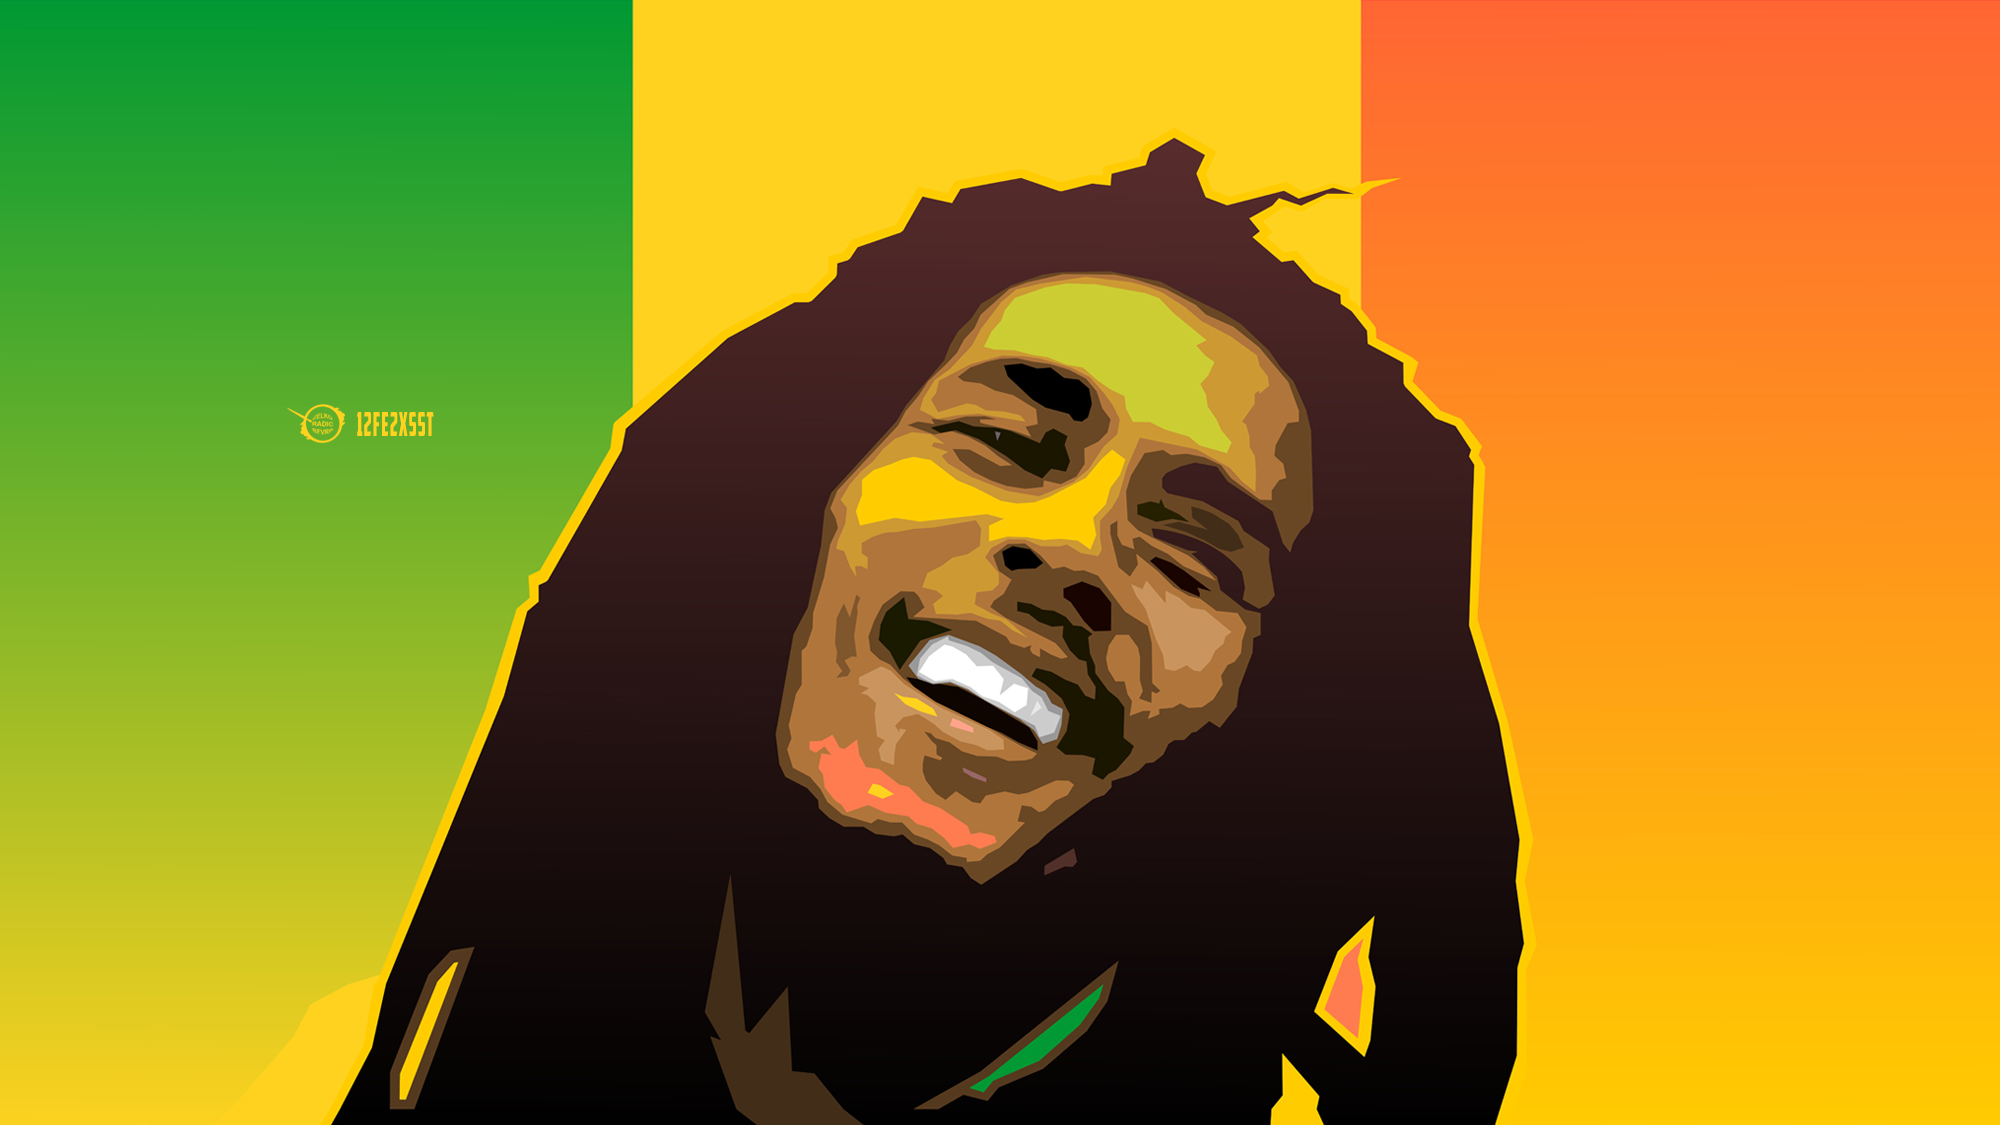 bob marley, music, musician, portrait, reggae